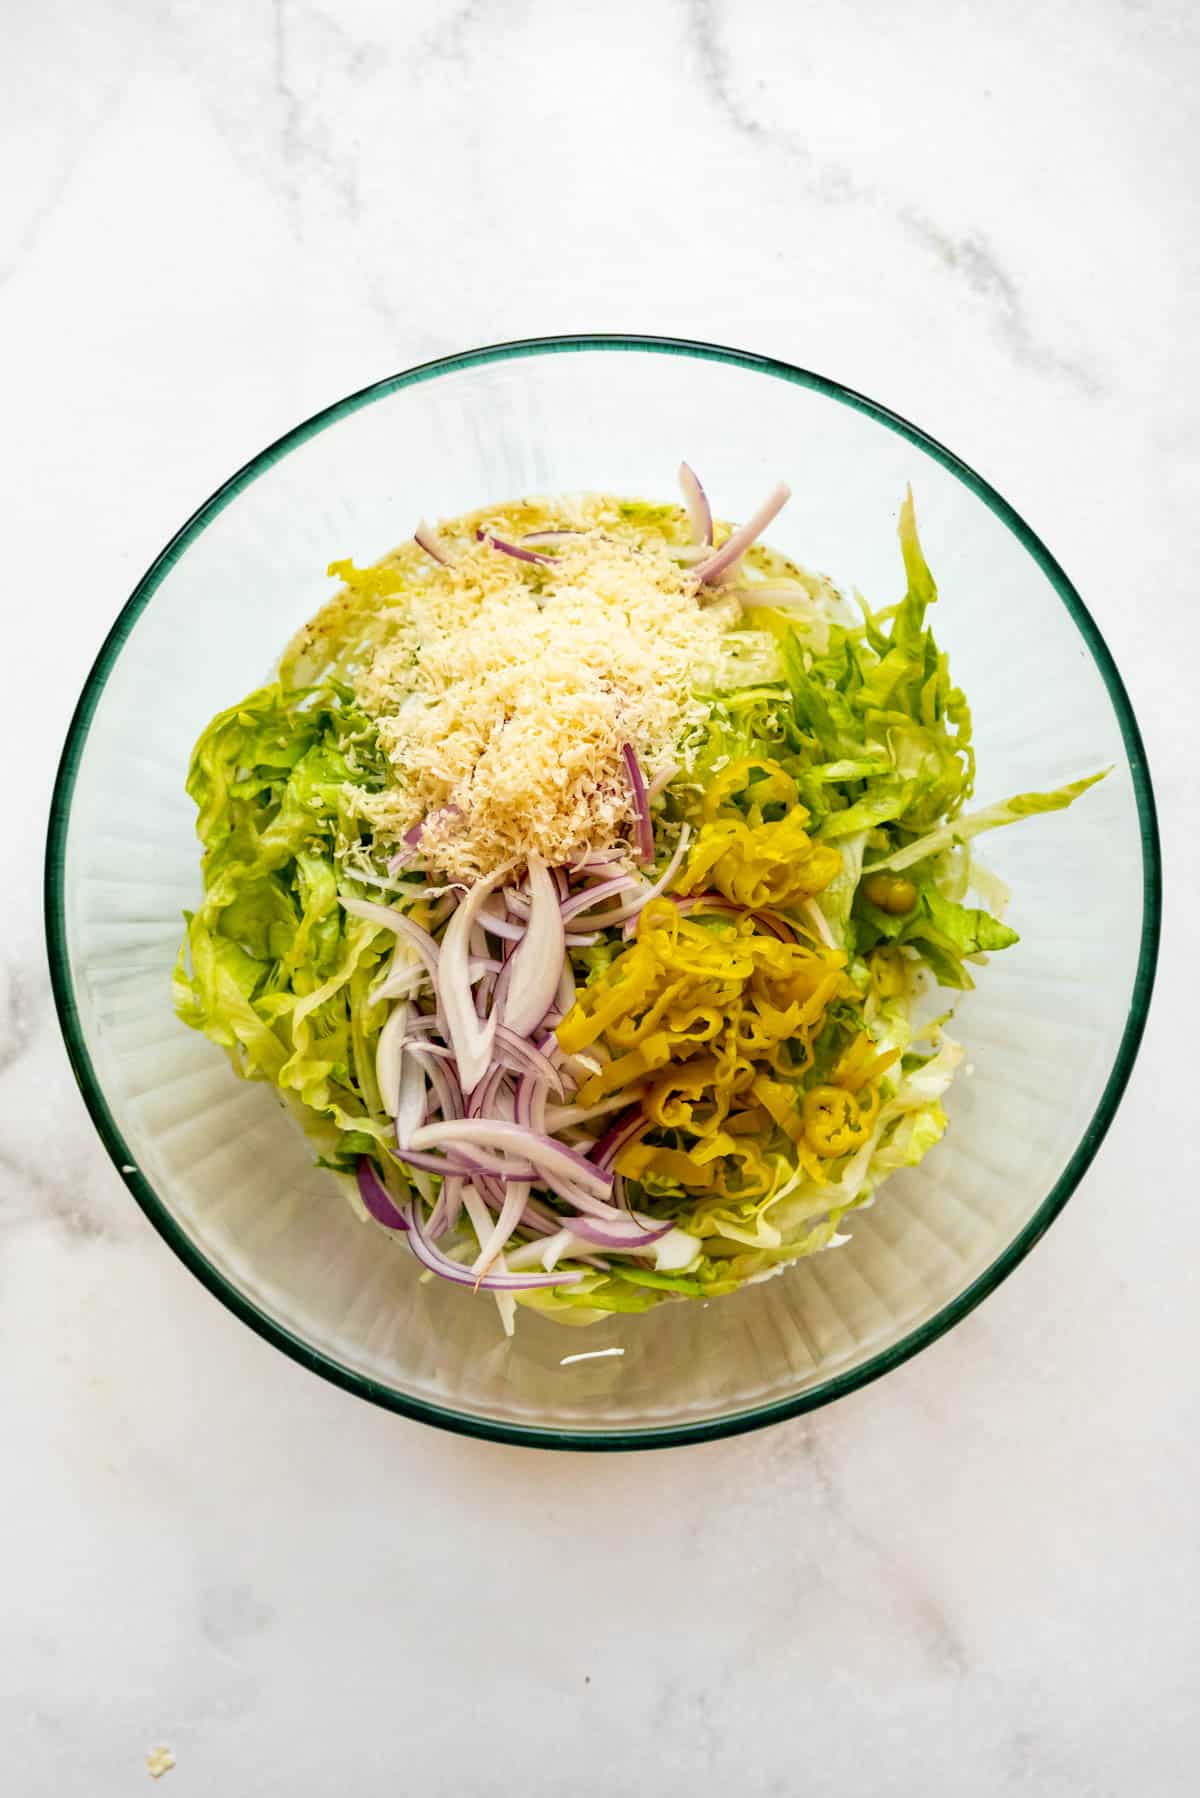 Grinder salad sandwich ingredients in a bowl.